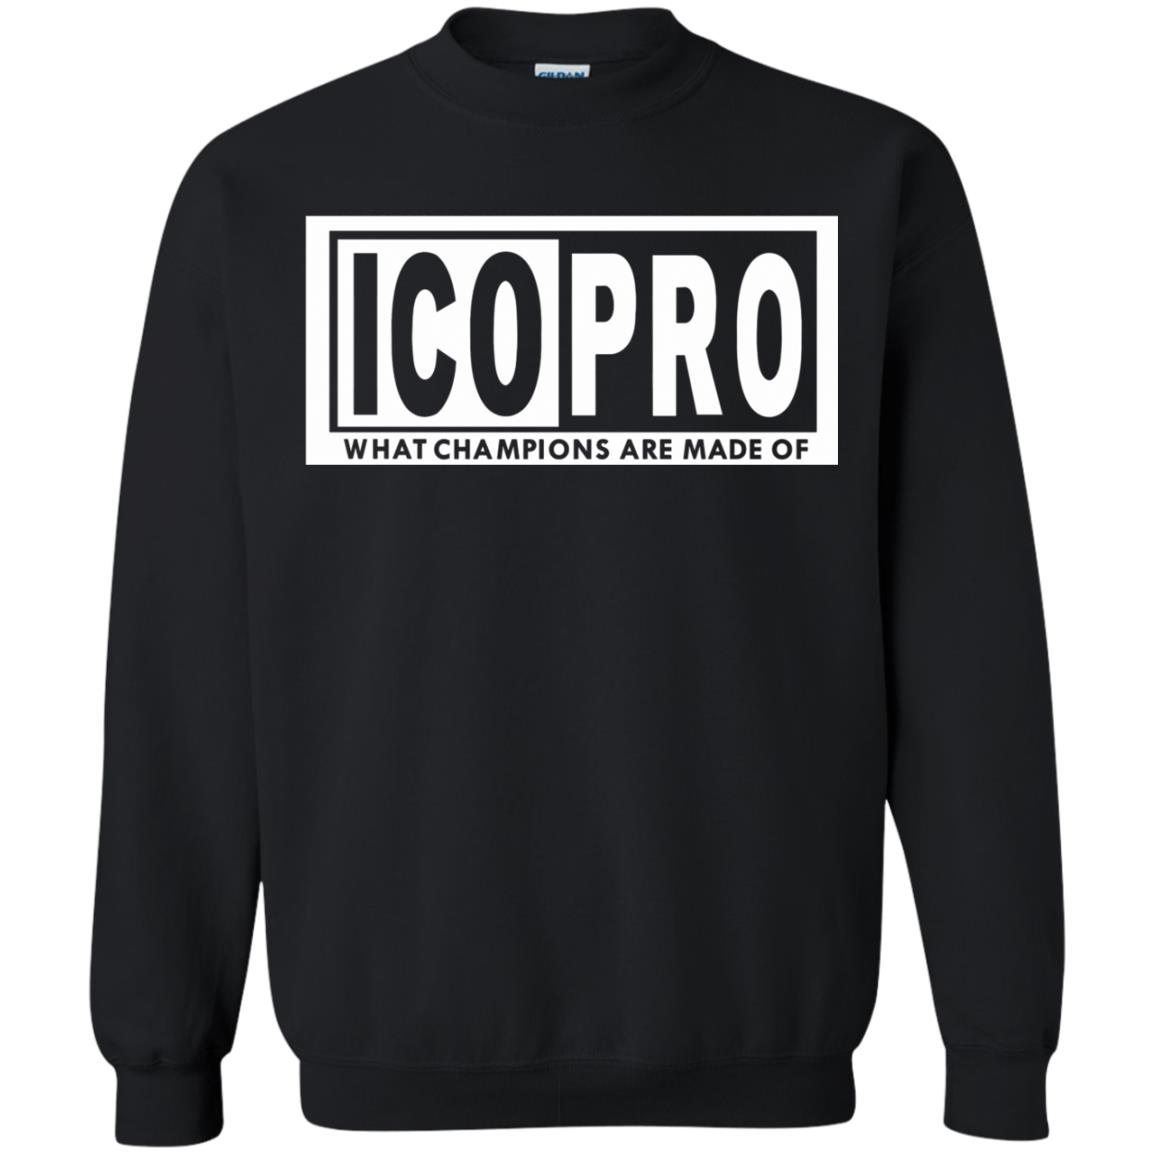 icopro sweatshirt - black